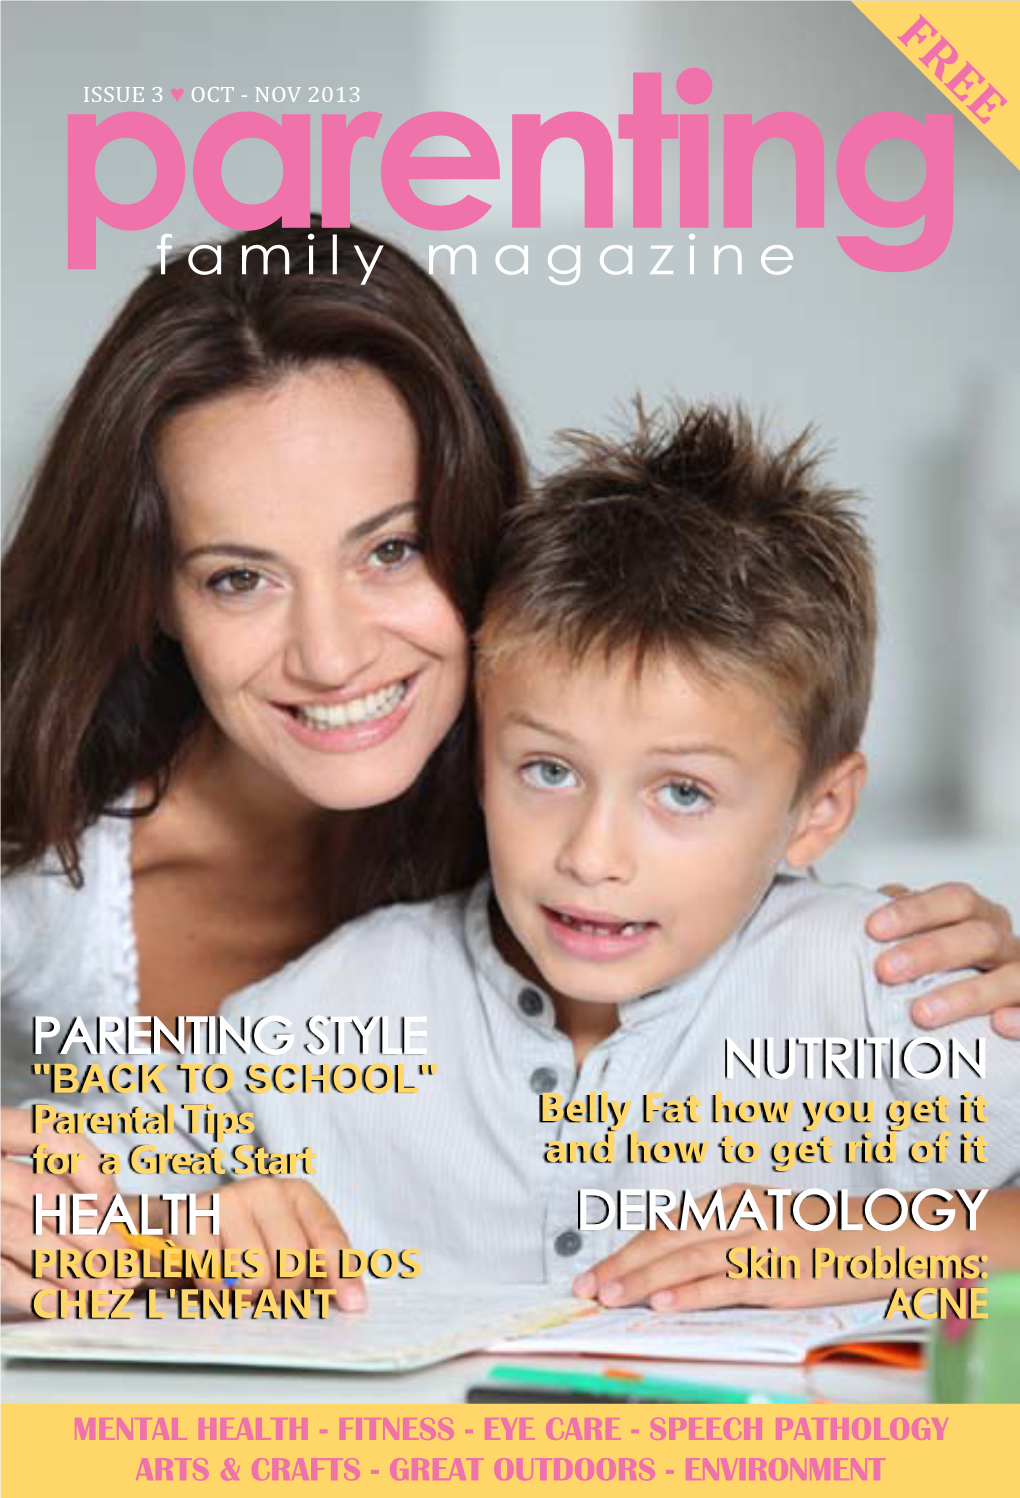 Family Magazine NUTRITION DERMATOLOGY HEALTH